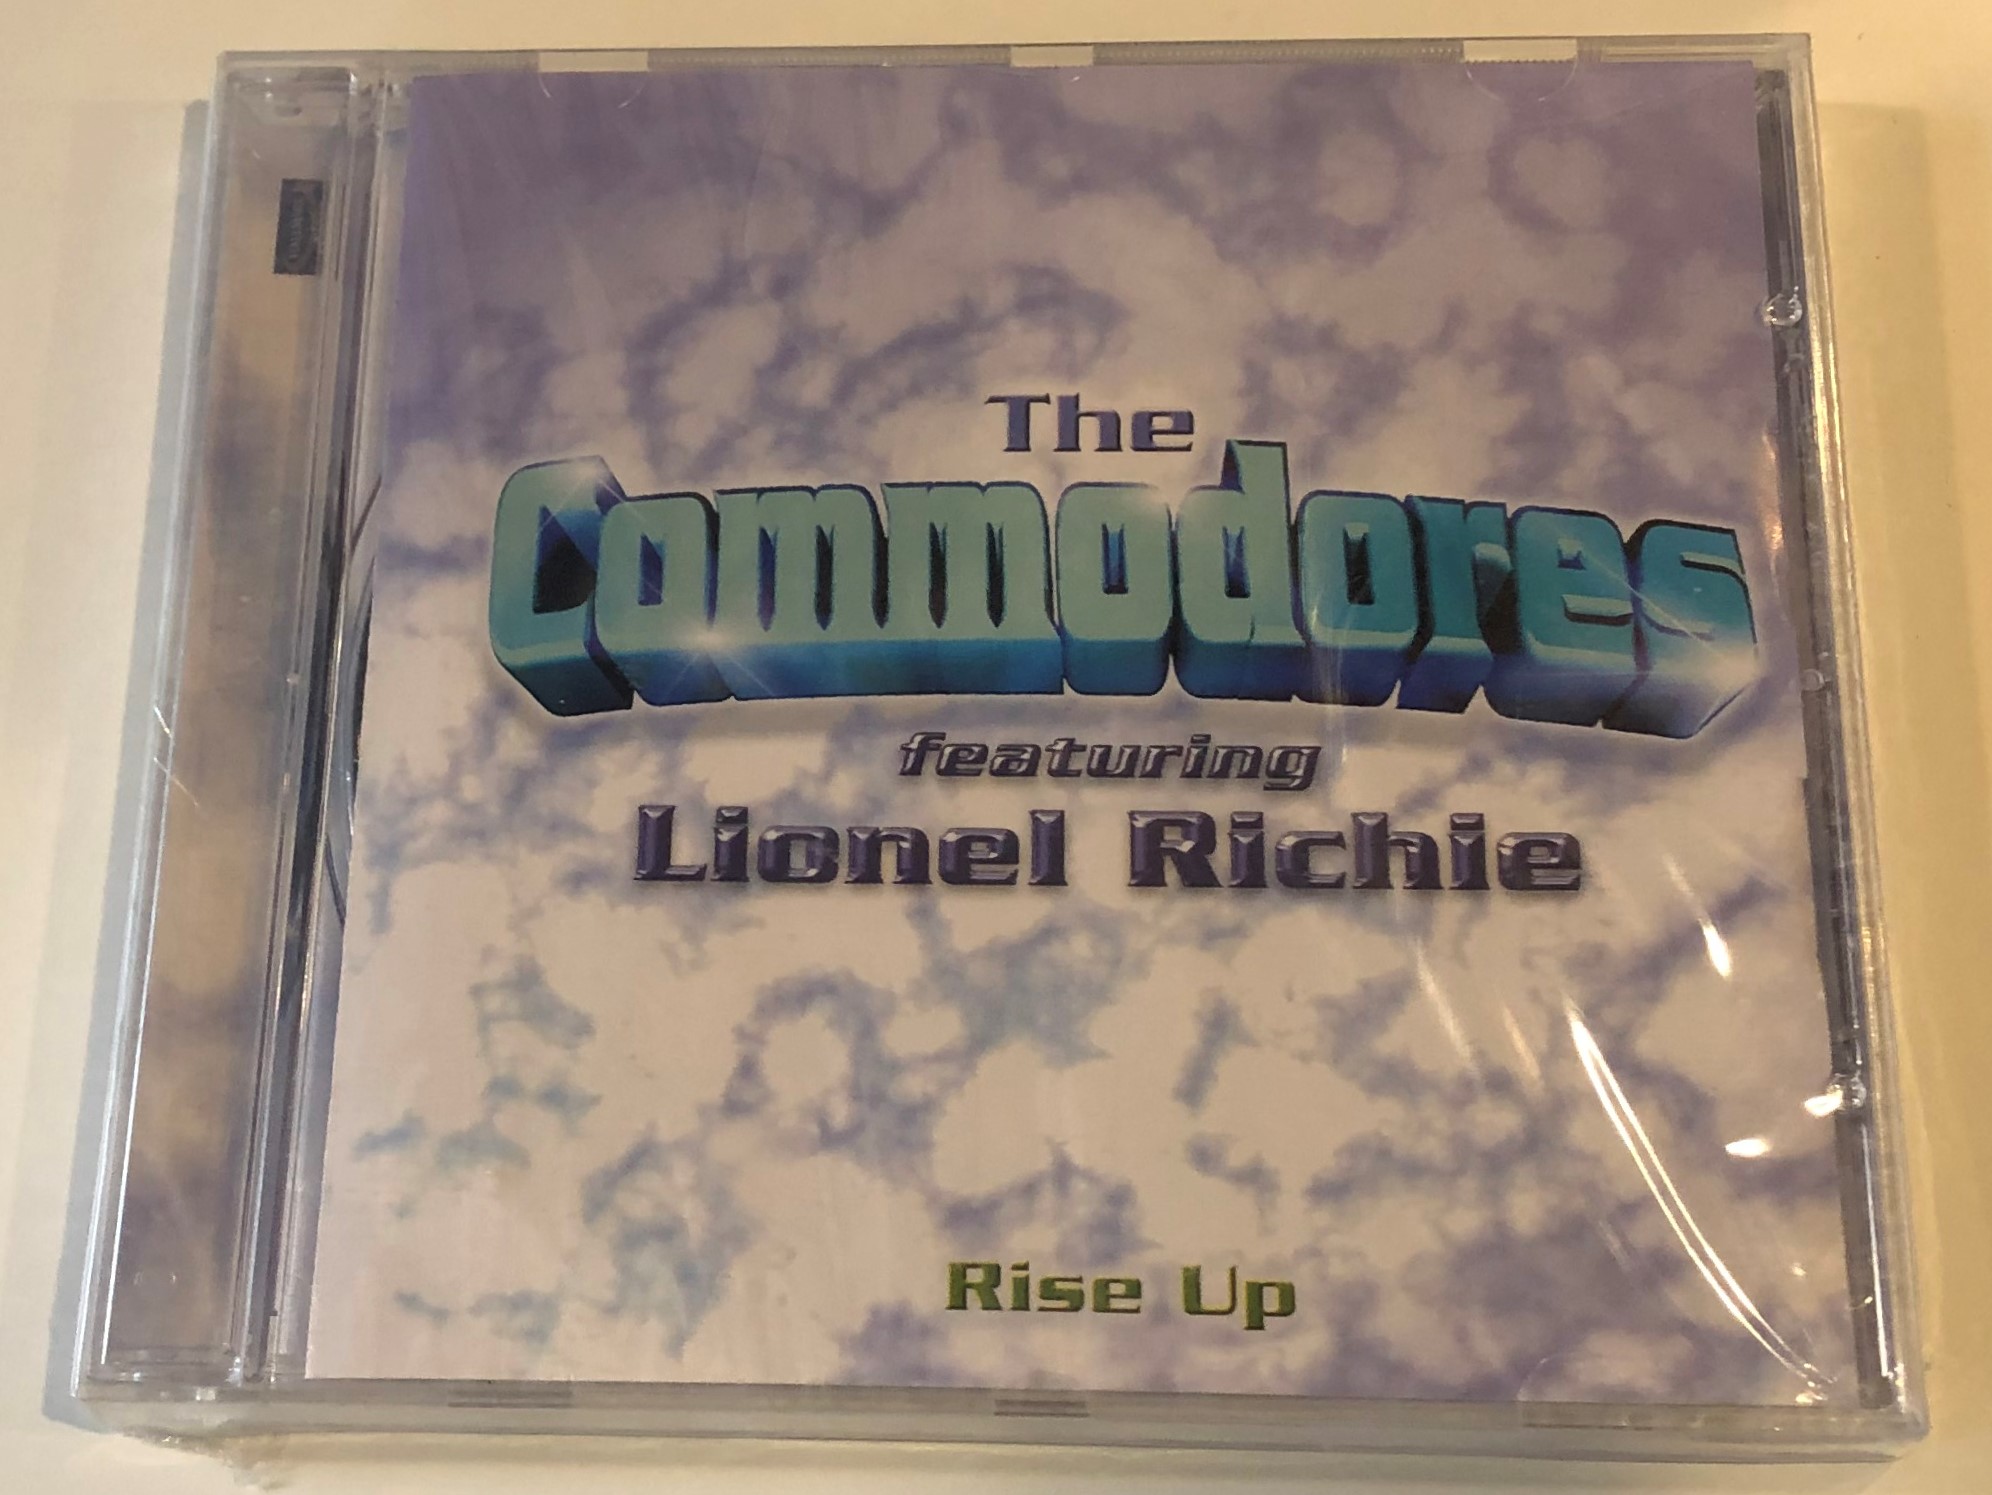 the-commodores-featuring-lionel-richie-rise-up-hallmark-music-entertainment-audio-cd-2002-701702-1-.jpg